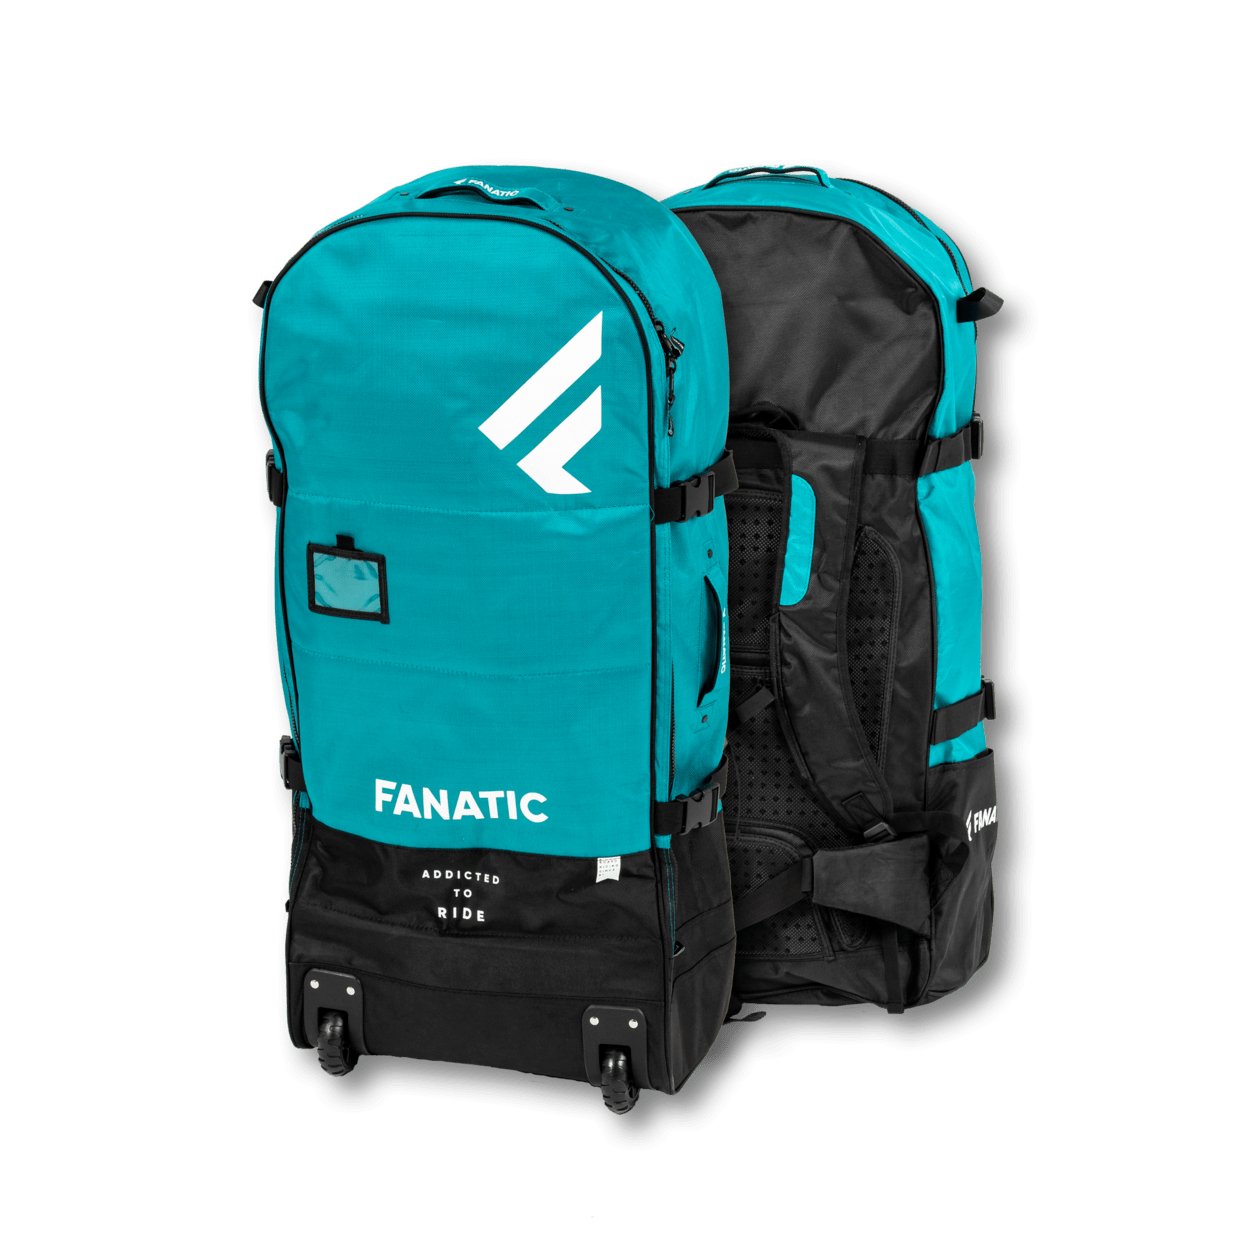 Fanatic Gearbag Premium iSUP 2024 - Worthing Watersports - 9008415928002 - Spareparts - Fanatic SUP